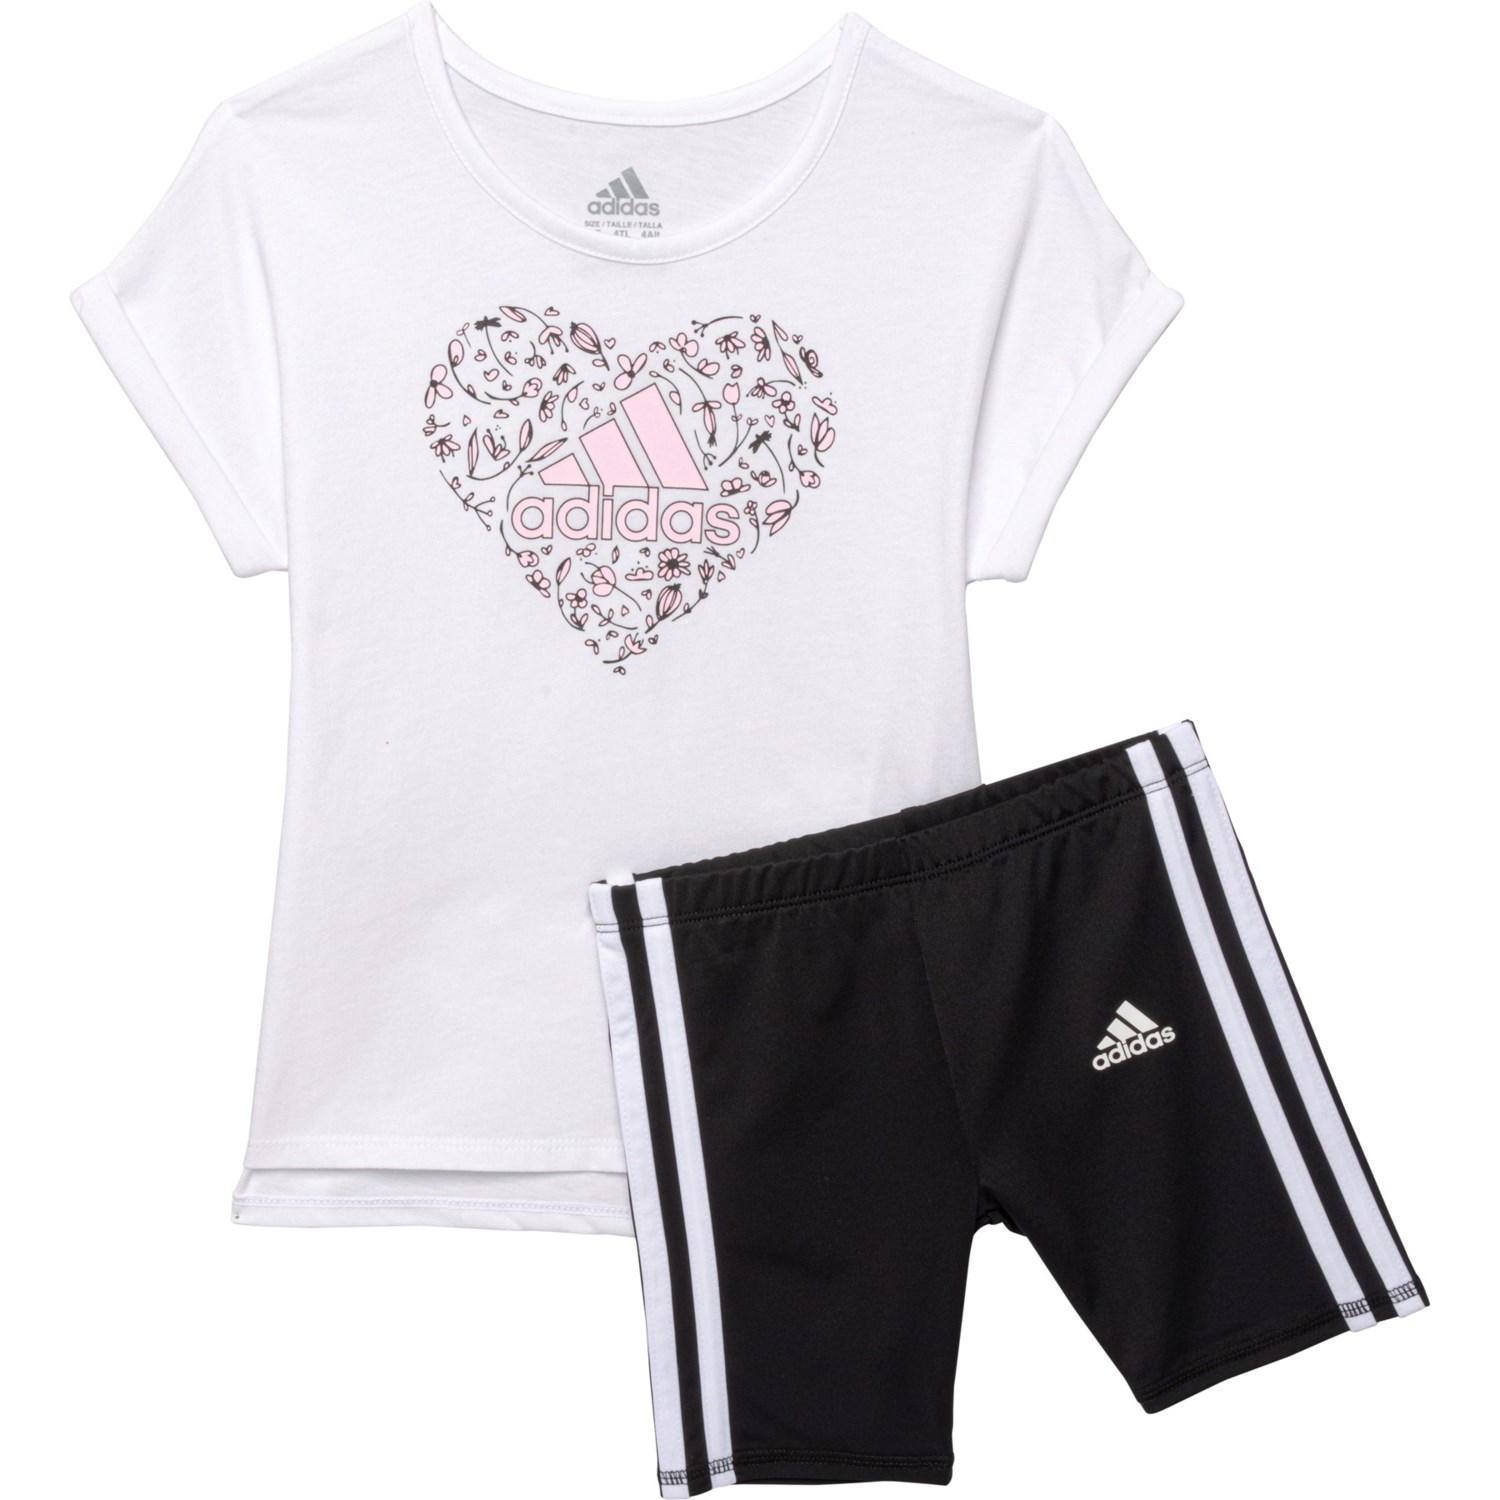 Adidas Toddler Girls Graphic T-Shirt and Bike Shorts Set - Short Sleeve